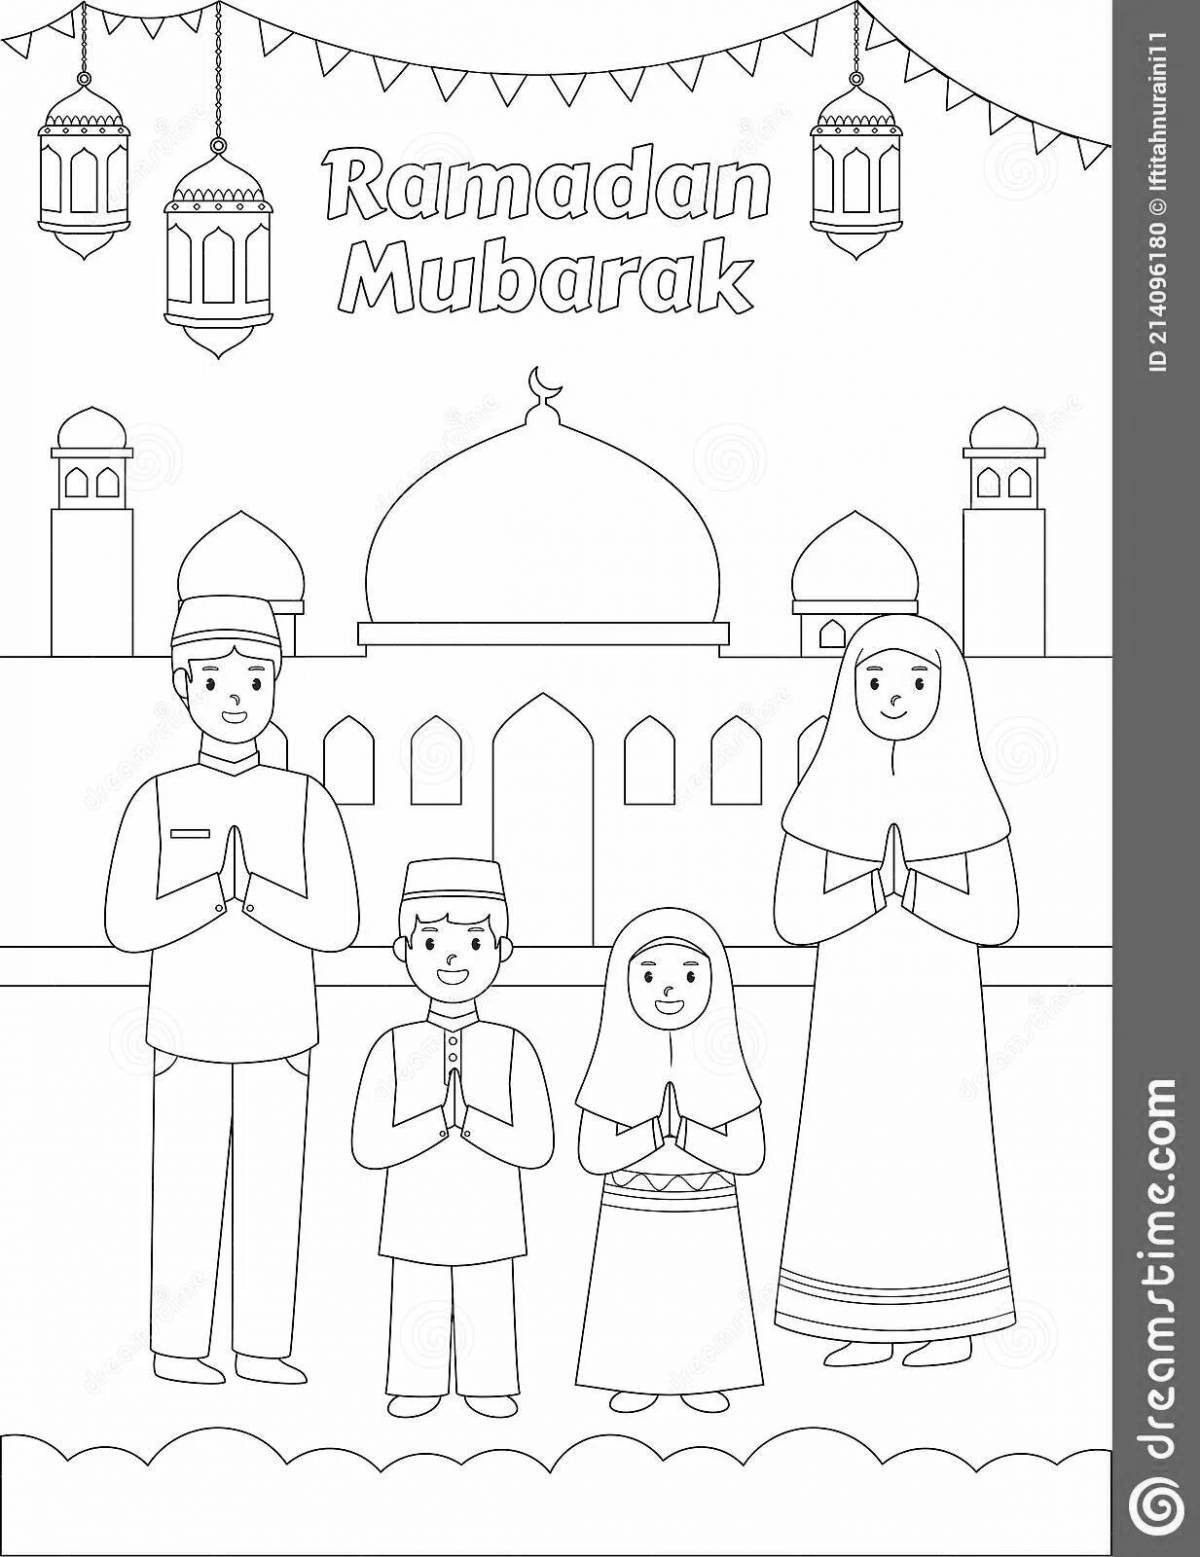 Colorful muslim family coloring book